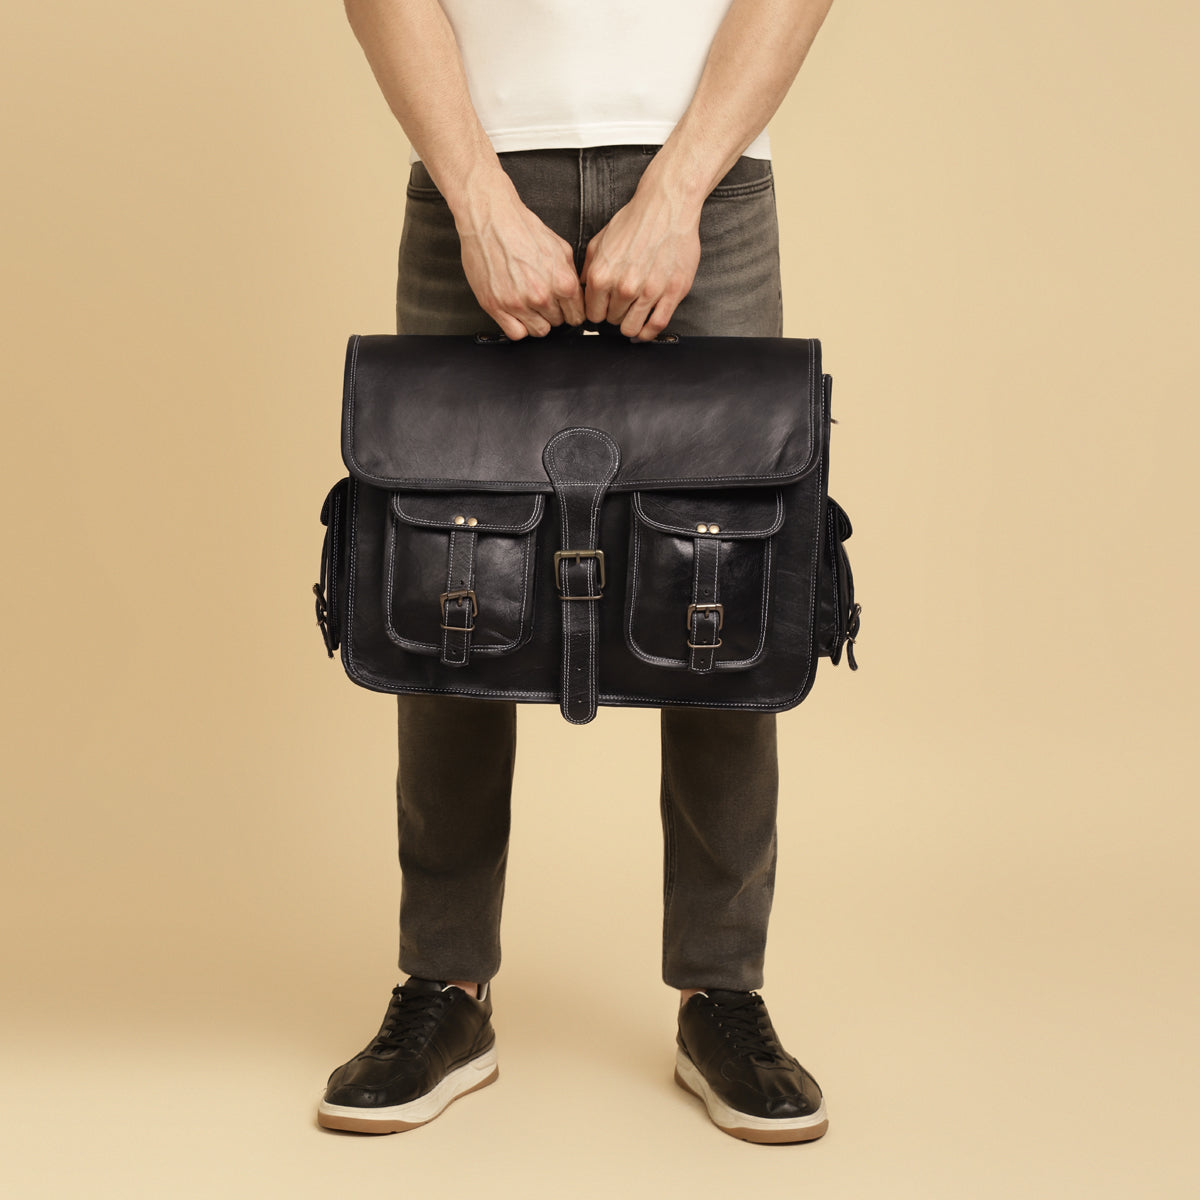 stylish black messenger bag